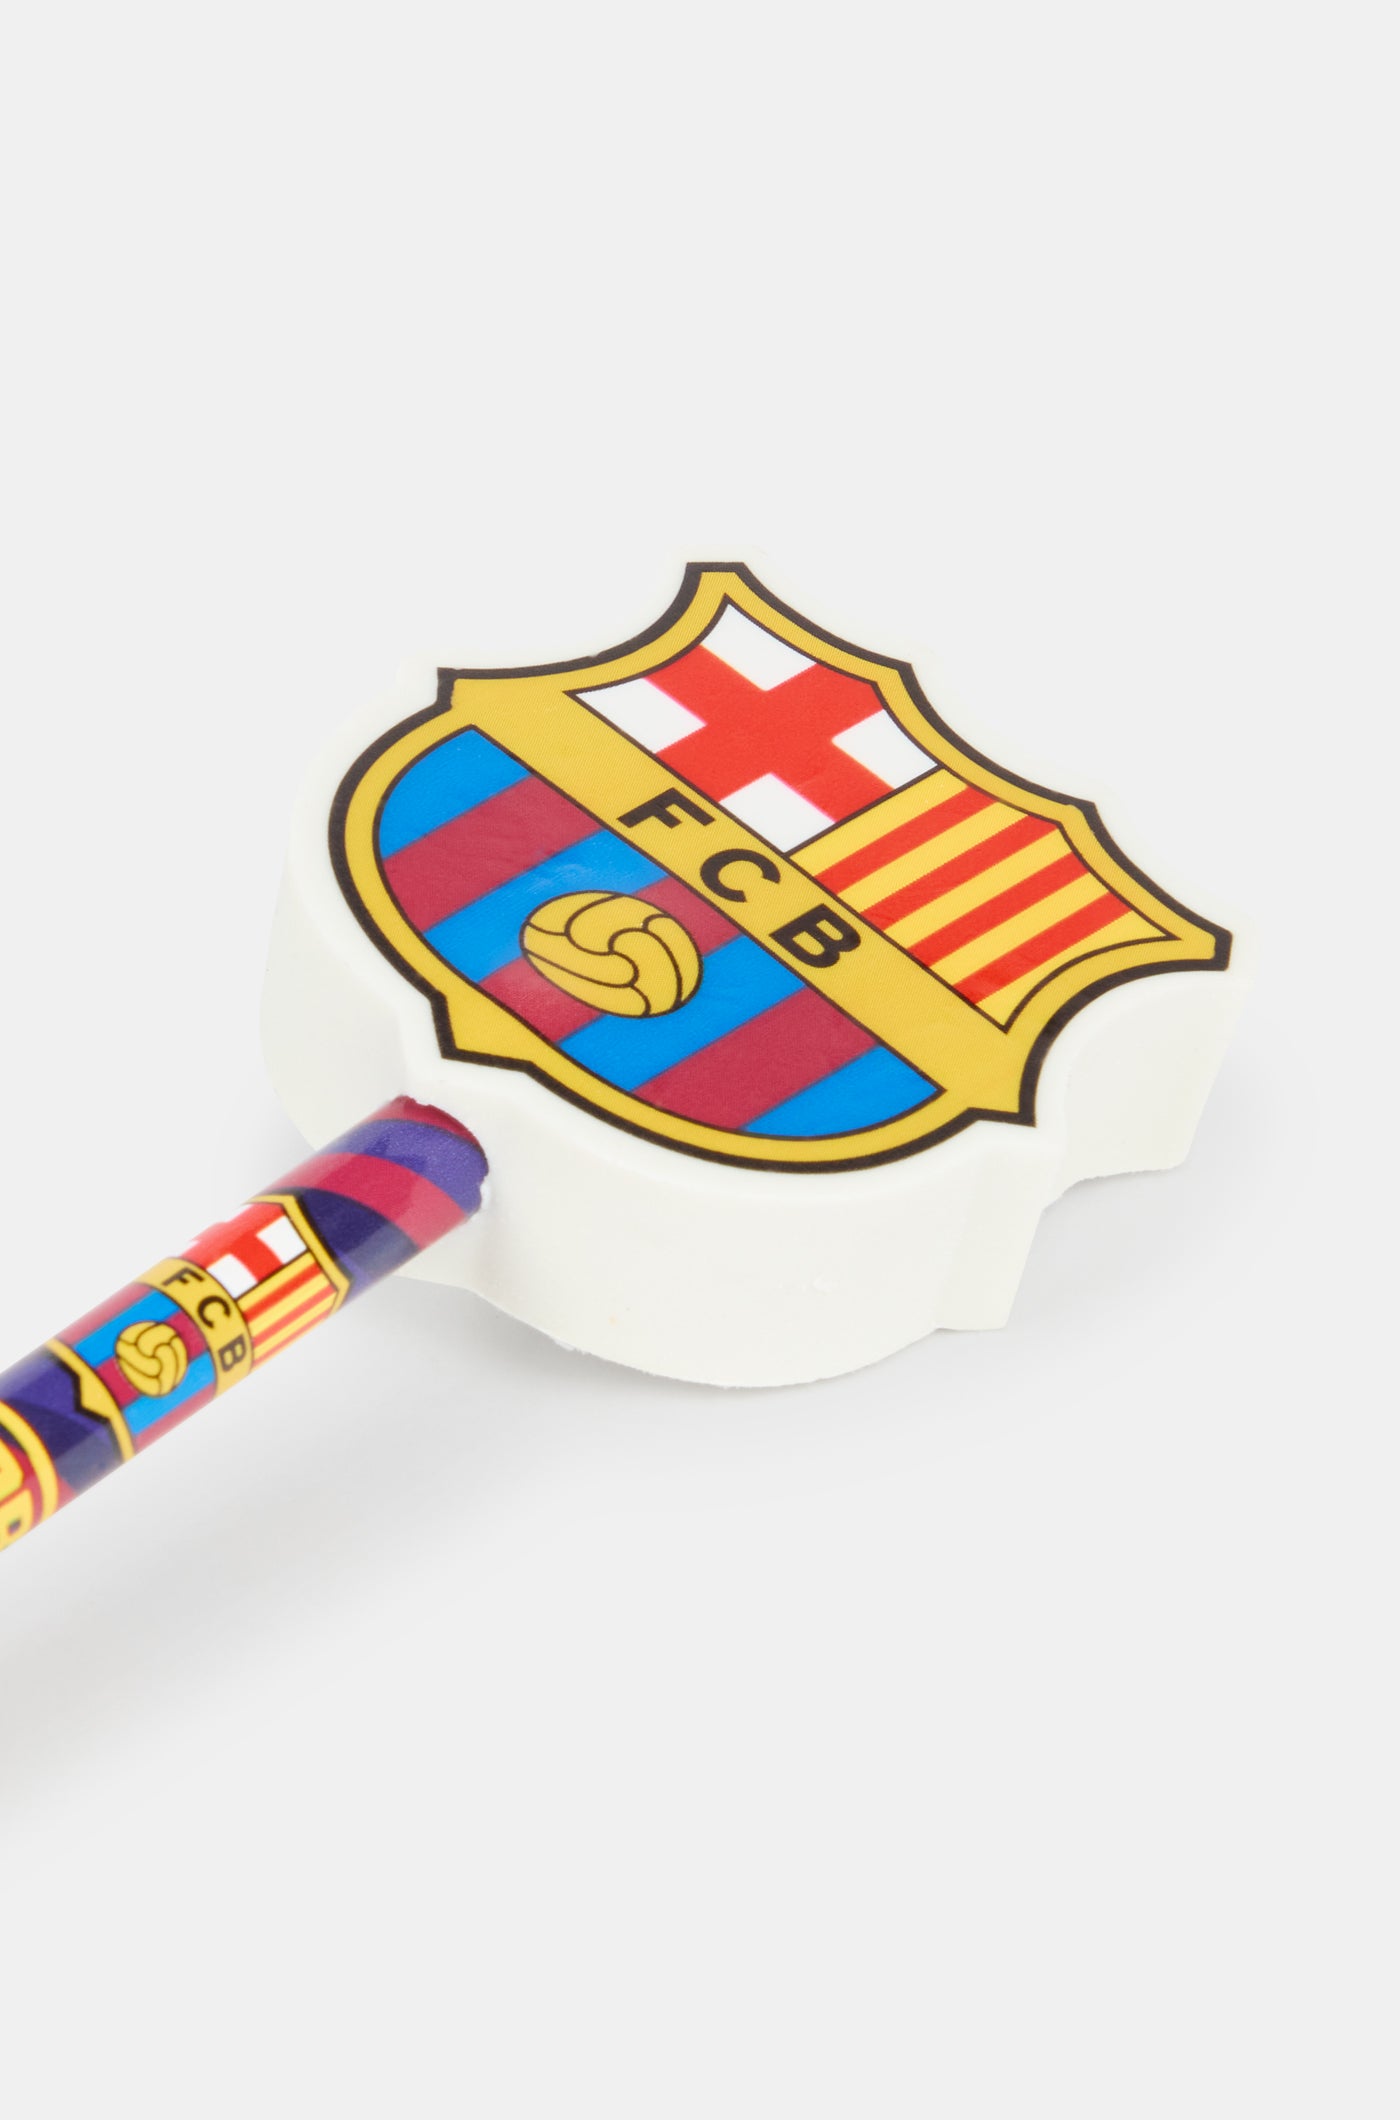 Lápiz del FC Barcelona con goma de borrar